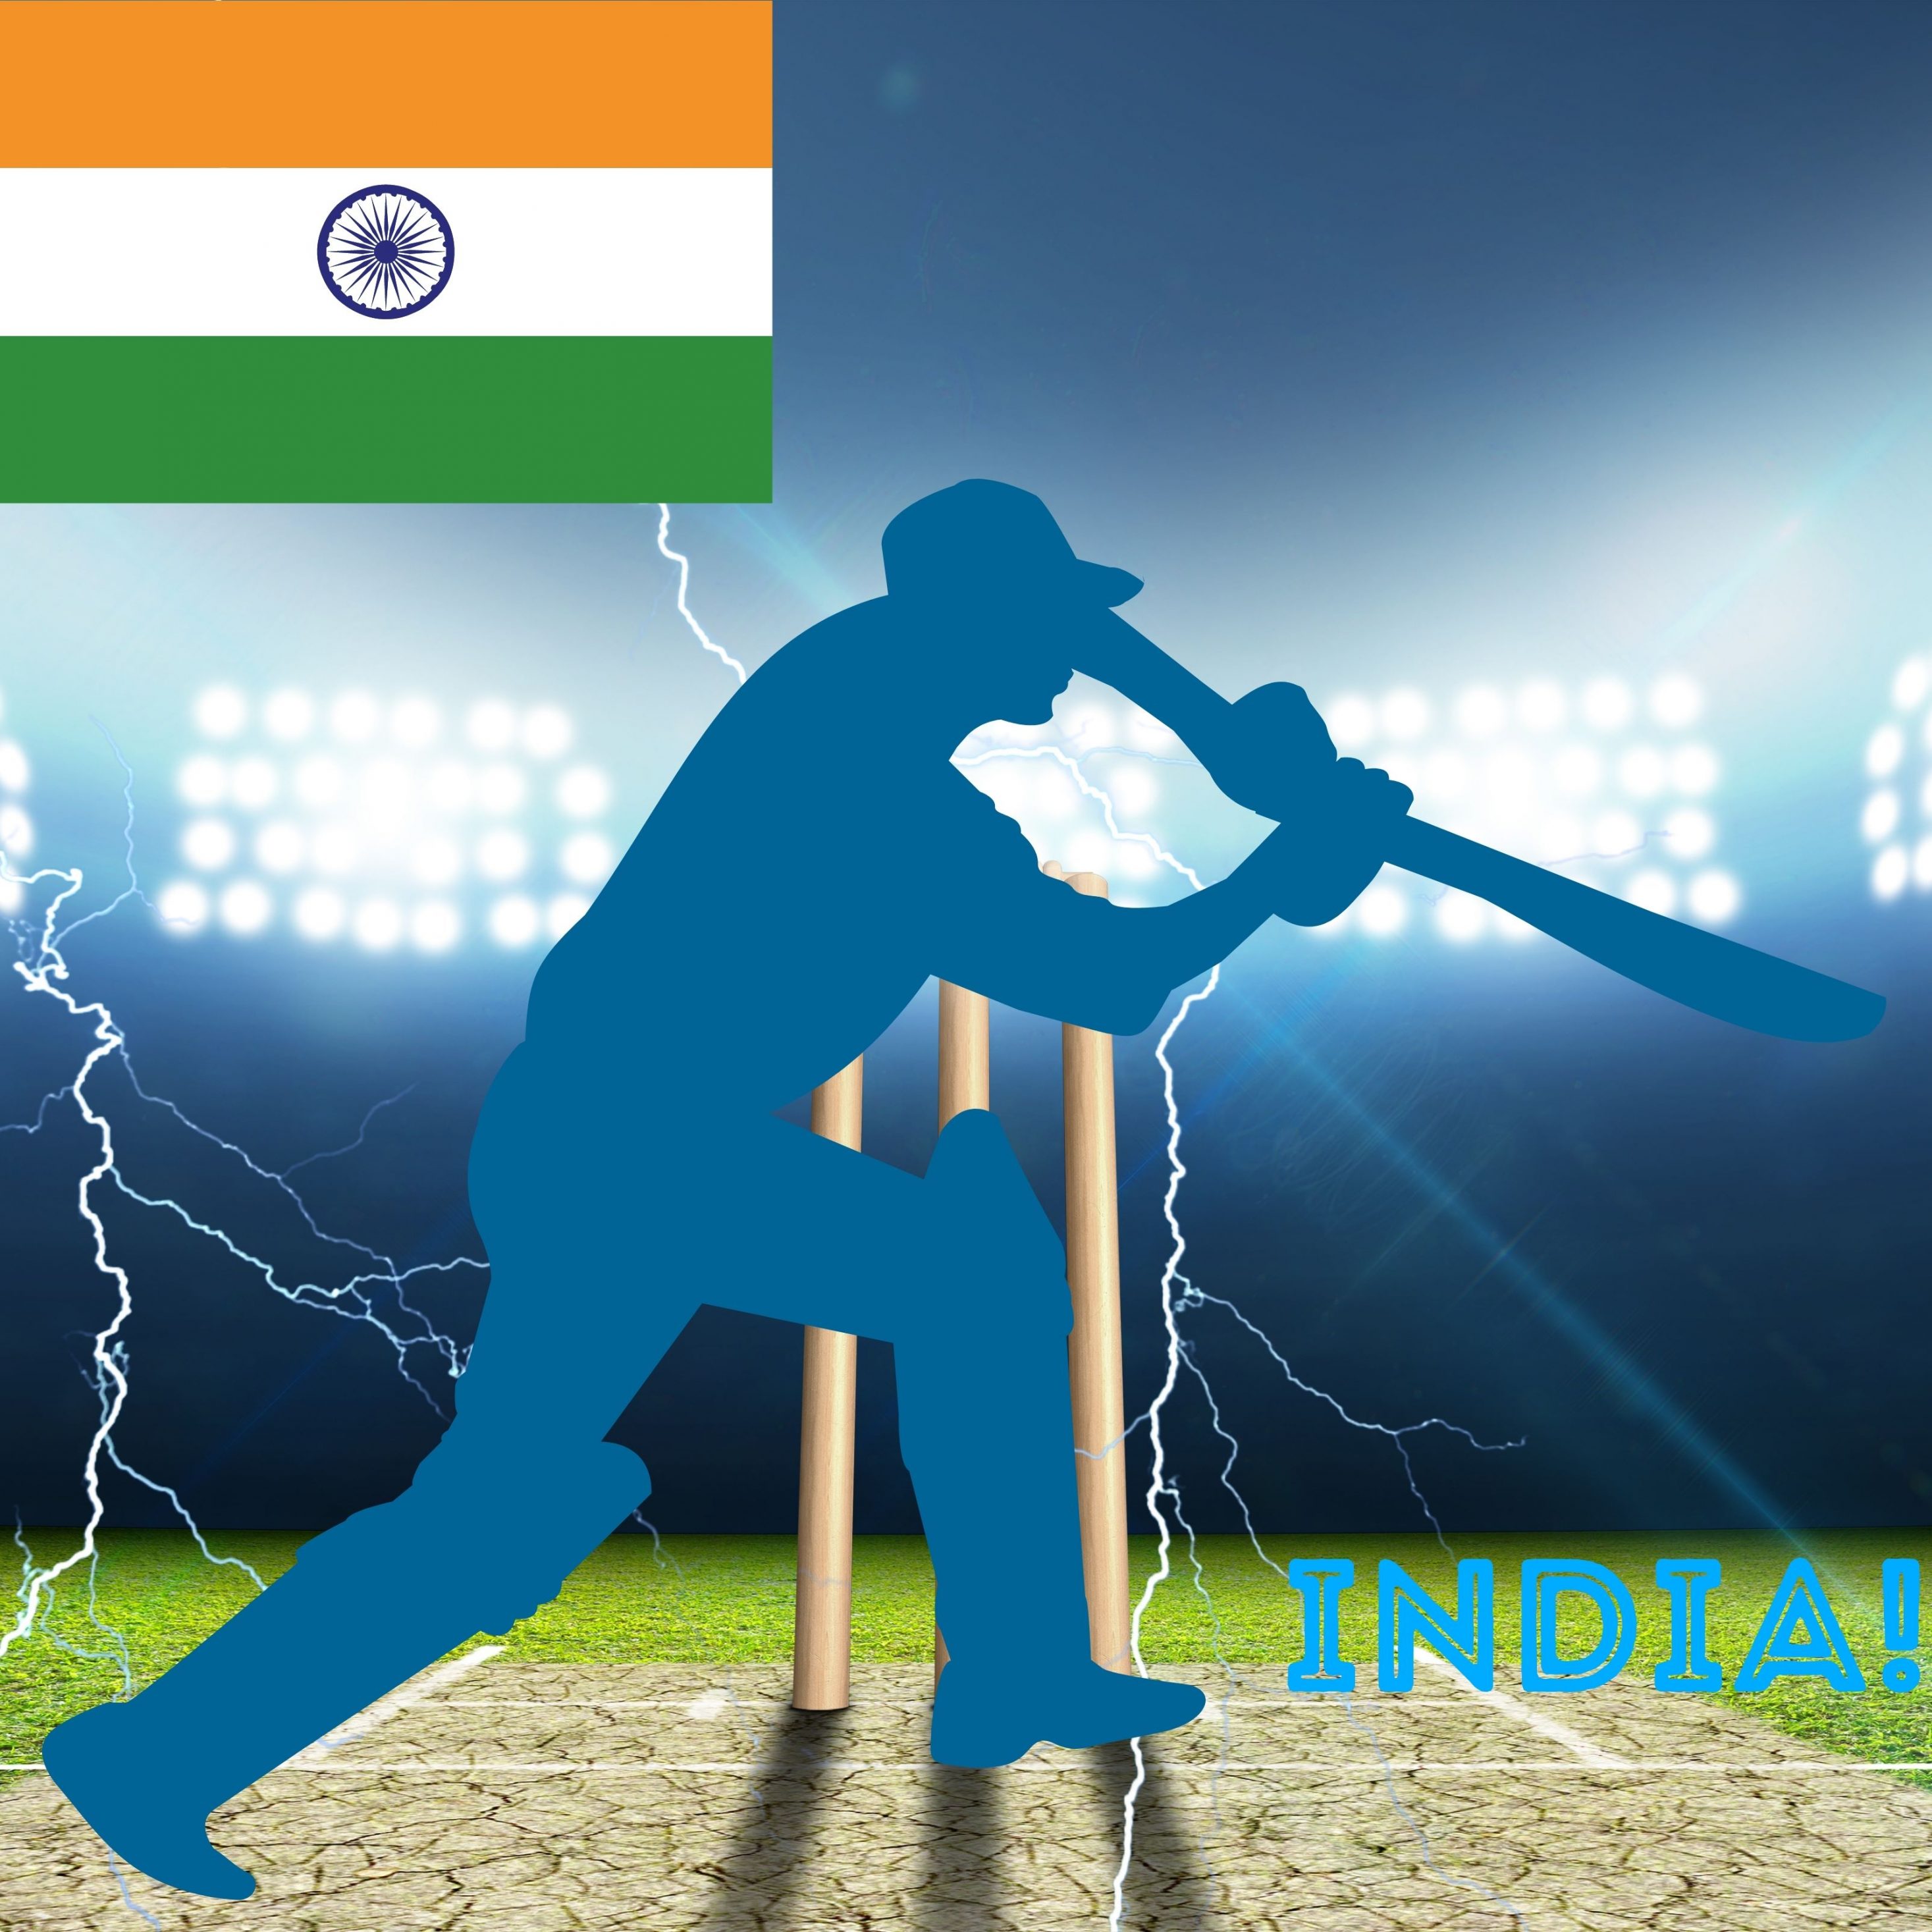 2934x2934 iOS iPad wallpaper 4k India Cricket Stadium iPad Wallpaper 2934x2934 pixels resolution